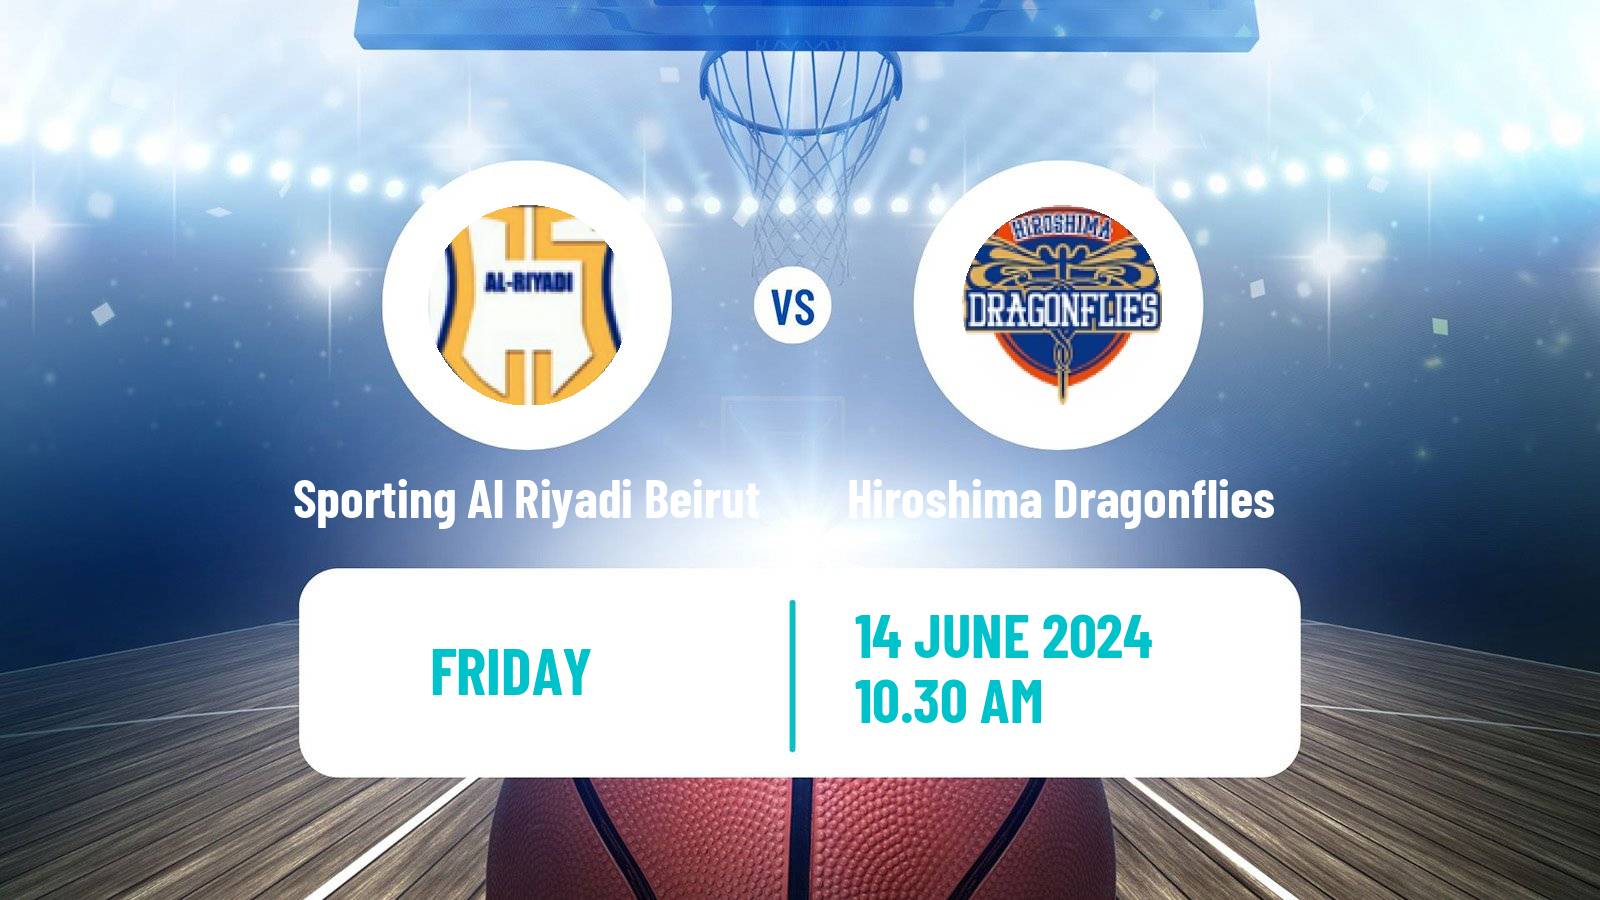 Basketball Asia Champions League Basketball Sporting Al Riyadi Beirut - Hiroshima Dragonflies